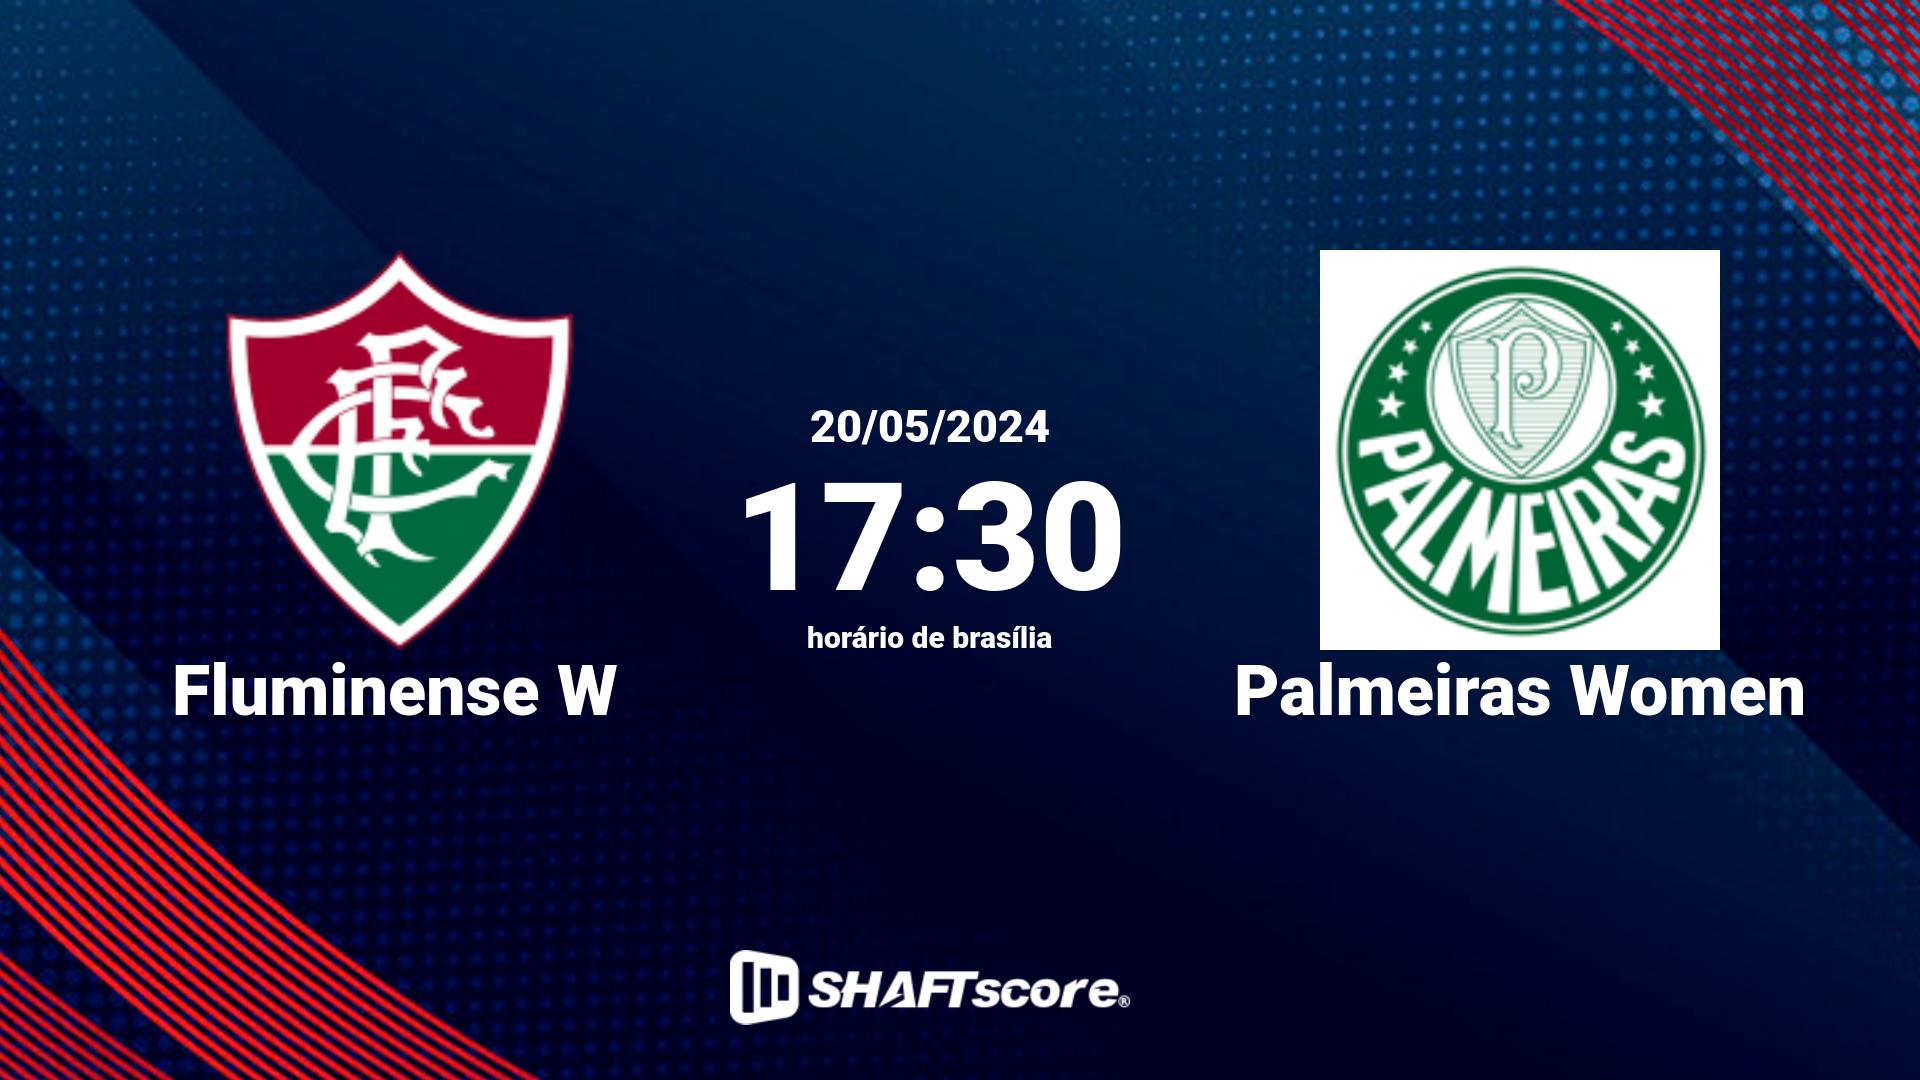 Estatísticas do jogo Fluminense W vs Palmeiras Women 20.05 17:30